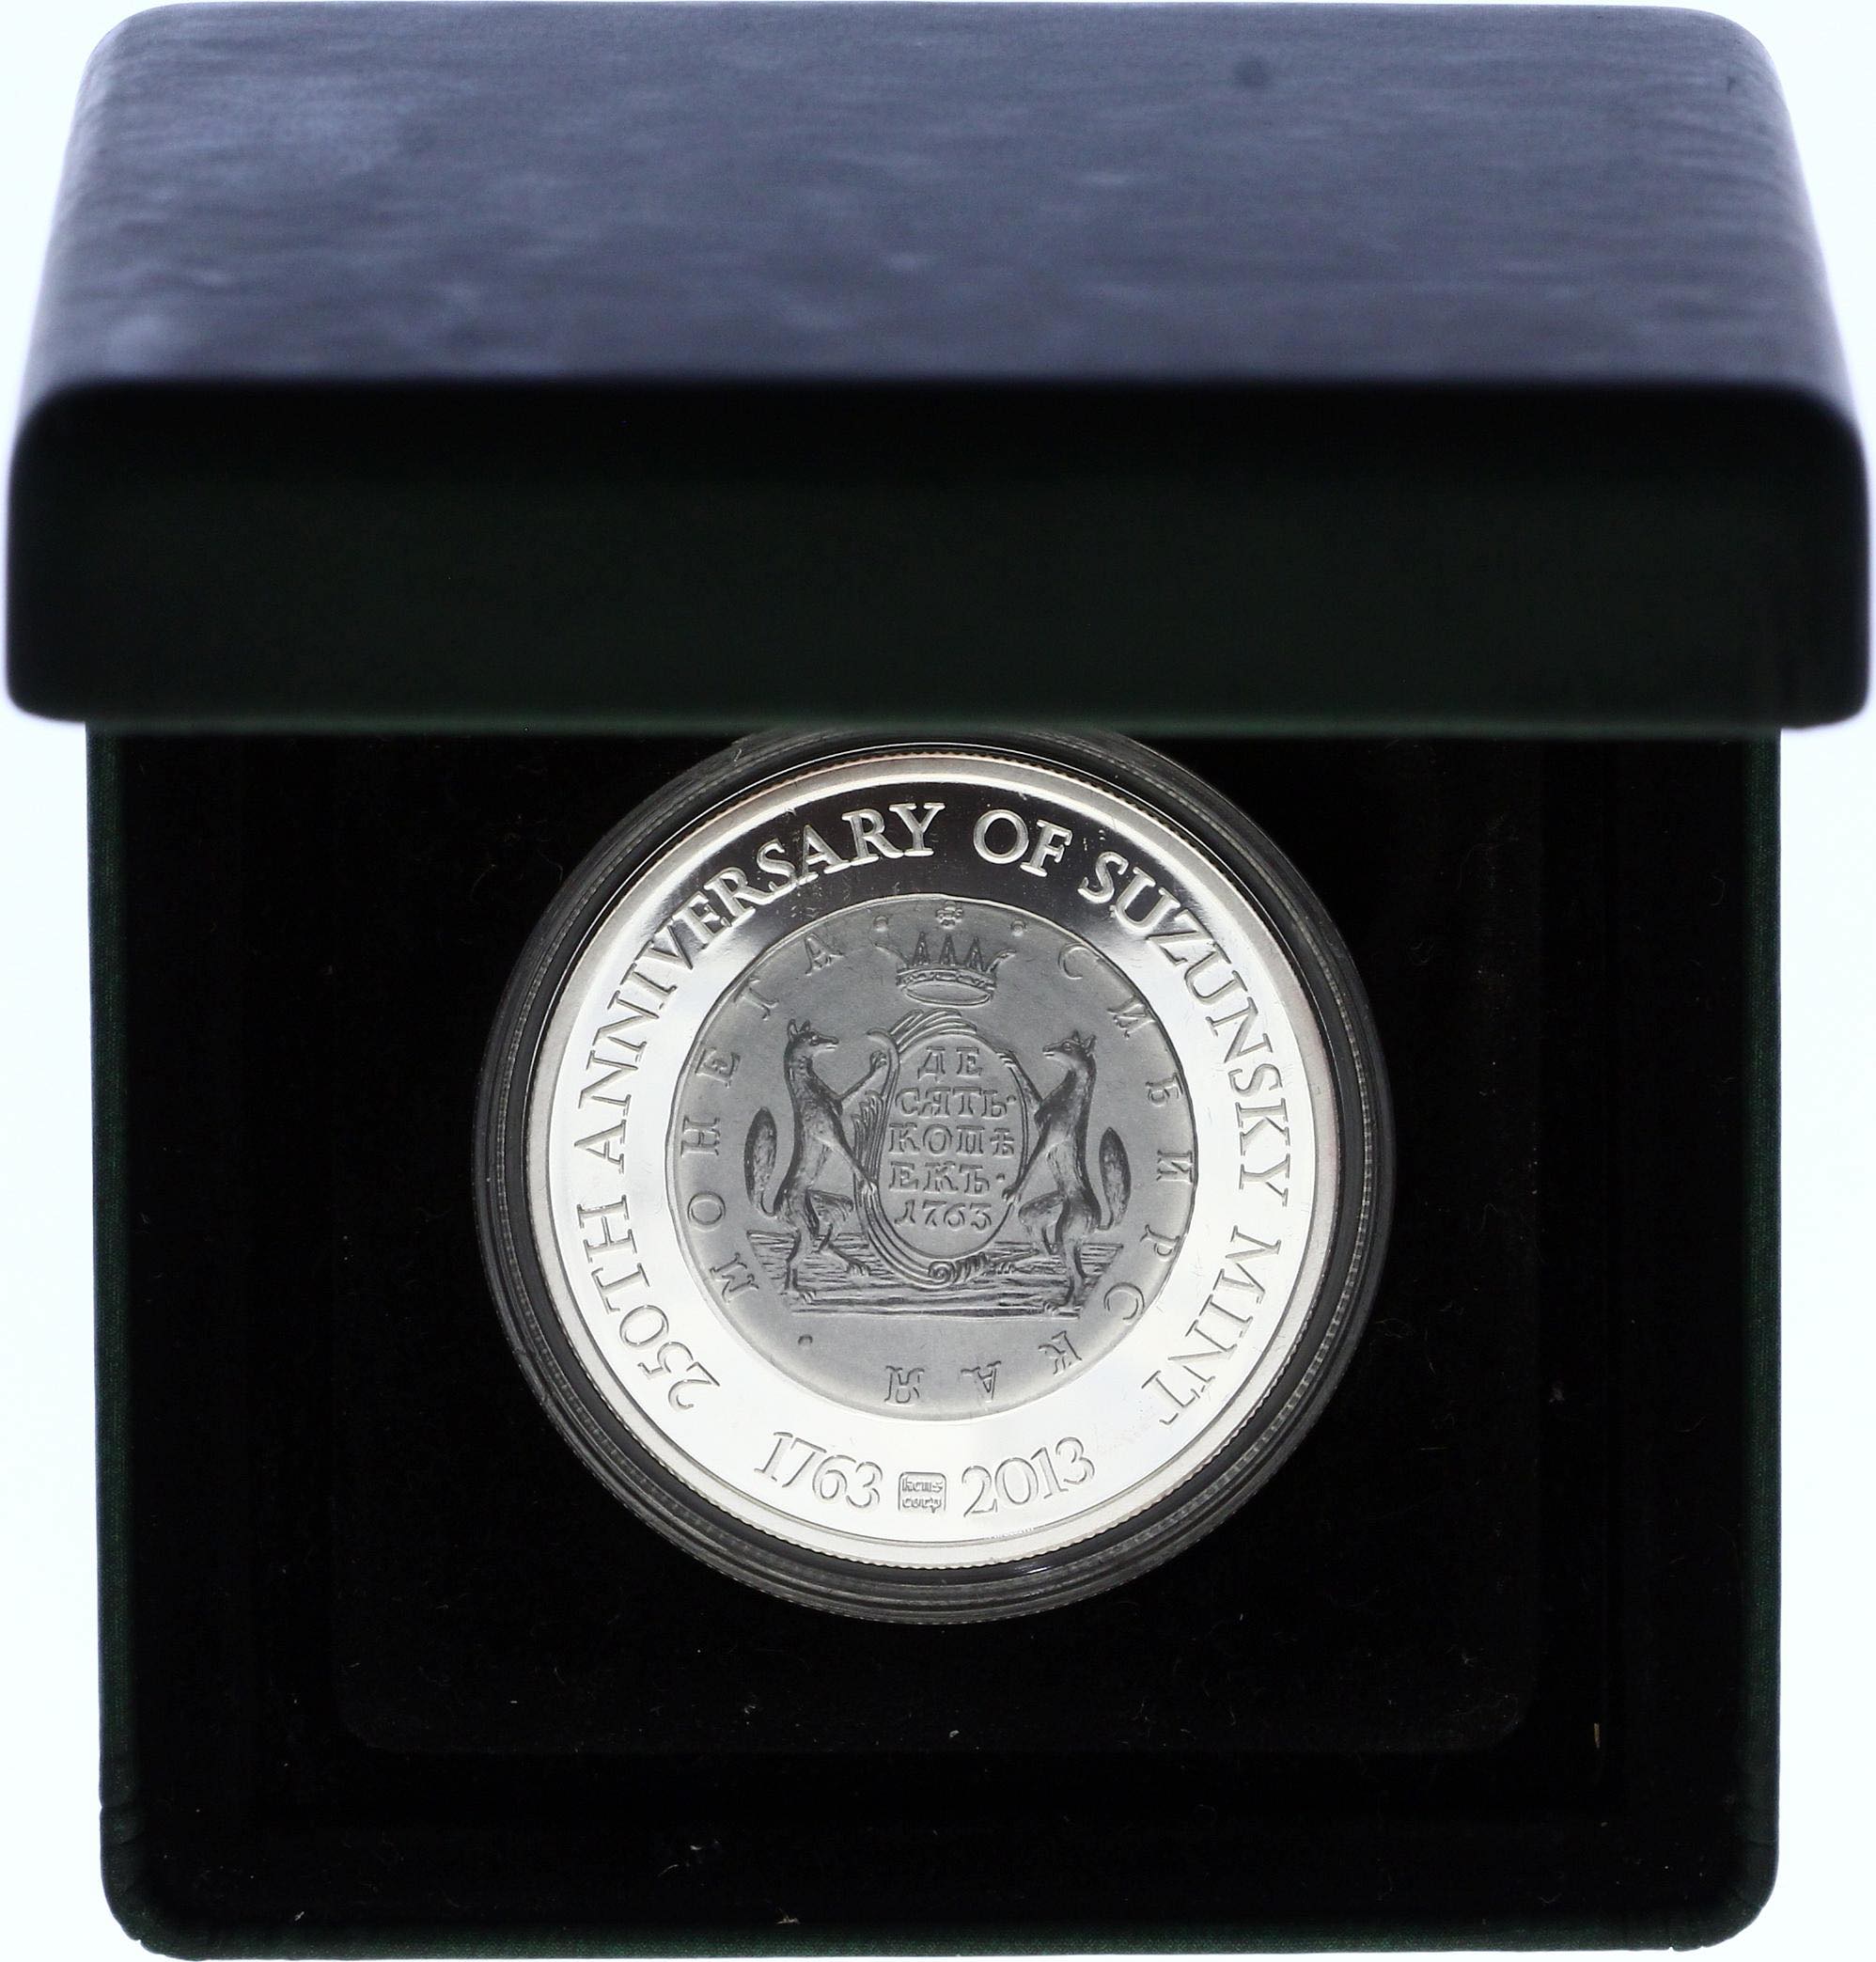 Niue 1 Dollar 2013 Suzunsky Mint